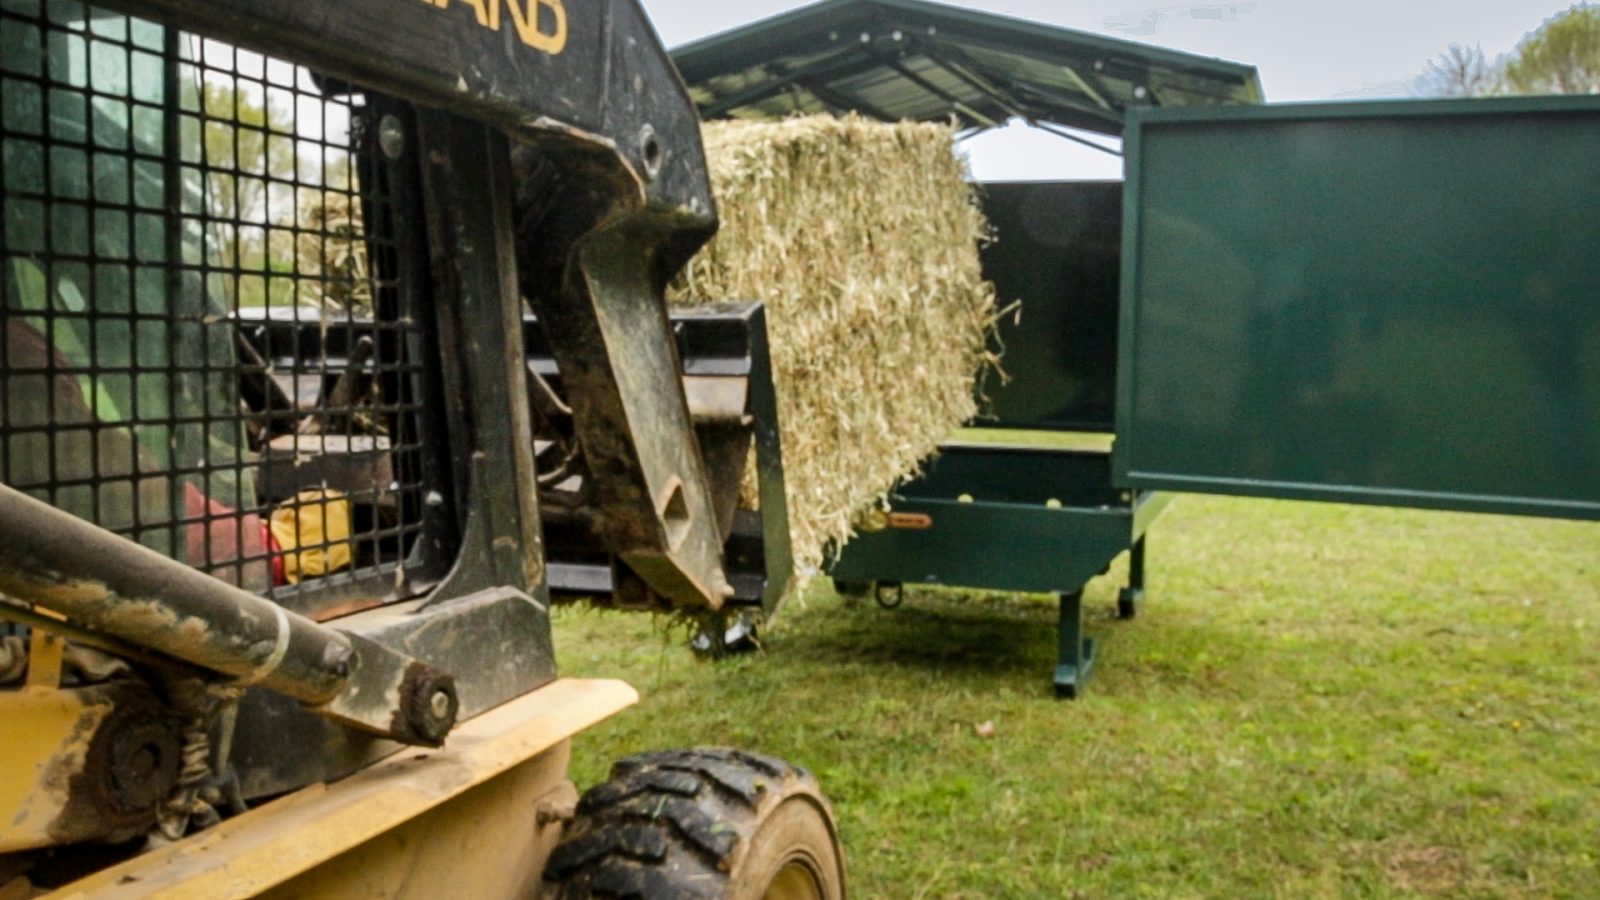 skid loader loading hay on covered hay feeder for horses